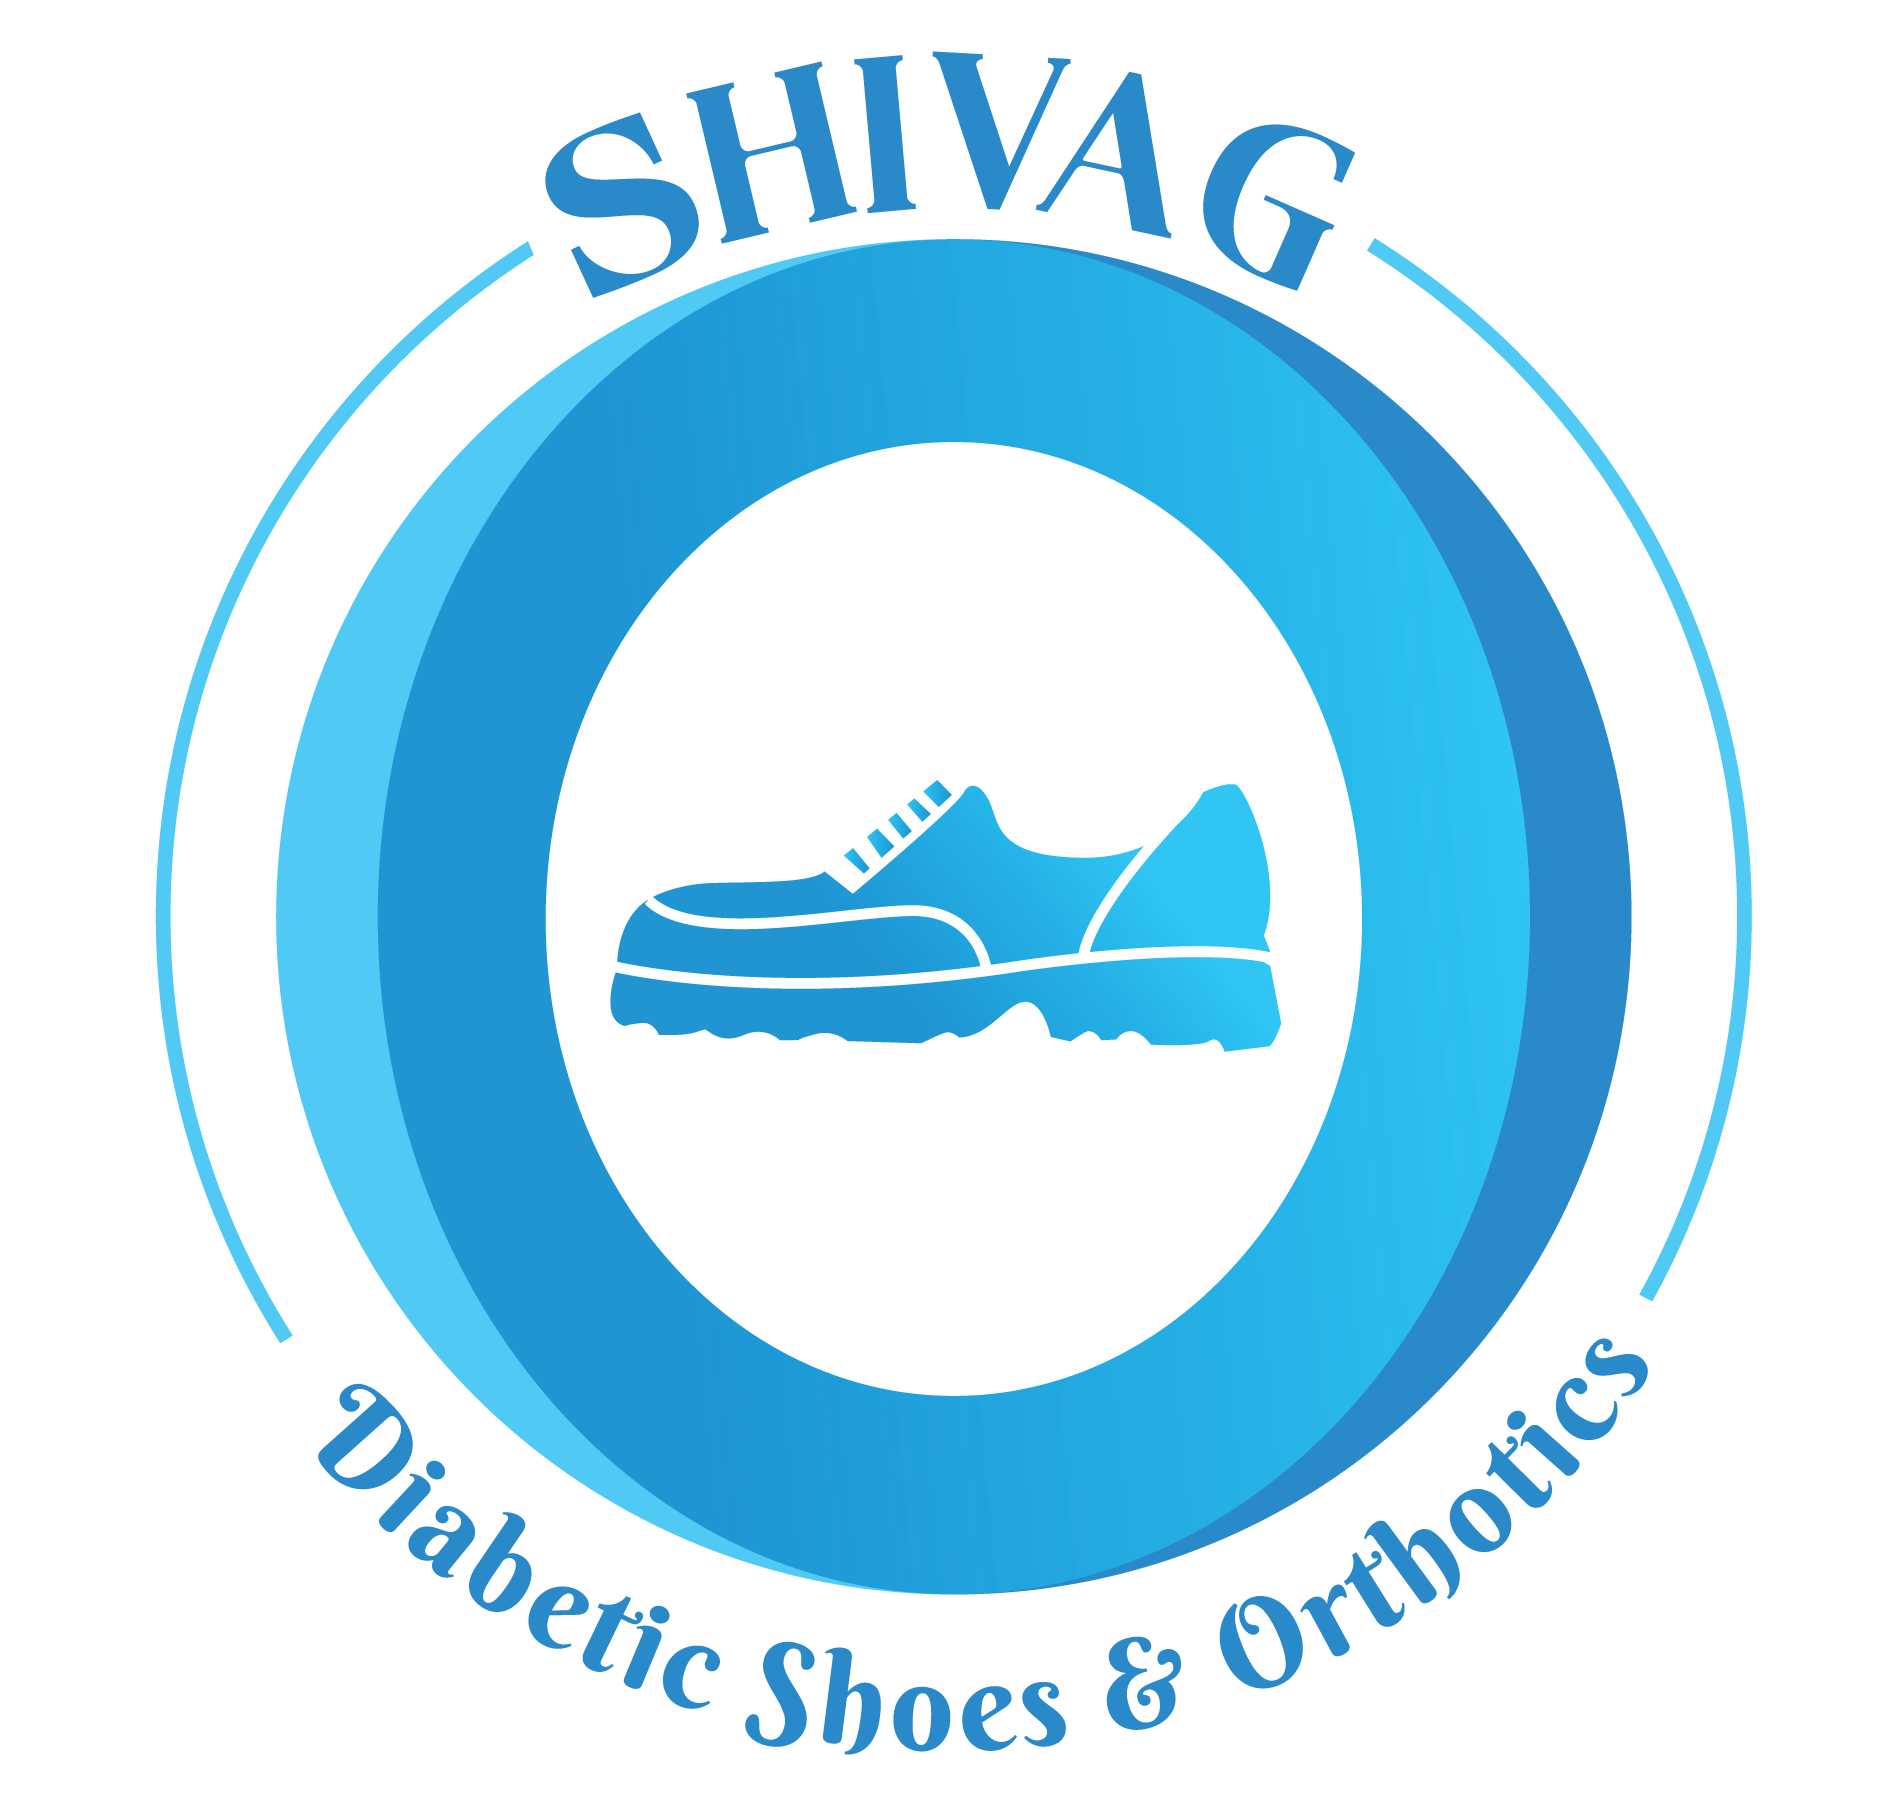 Shivag Diabetic Shoes and Orthotics, LLC